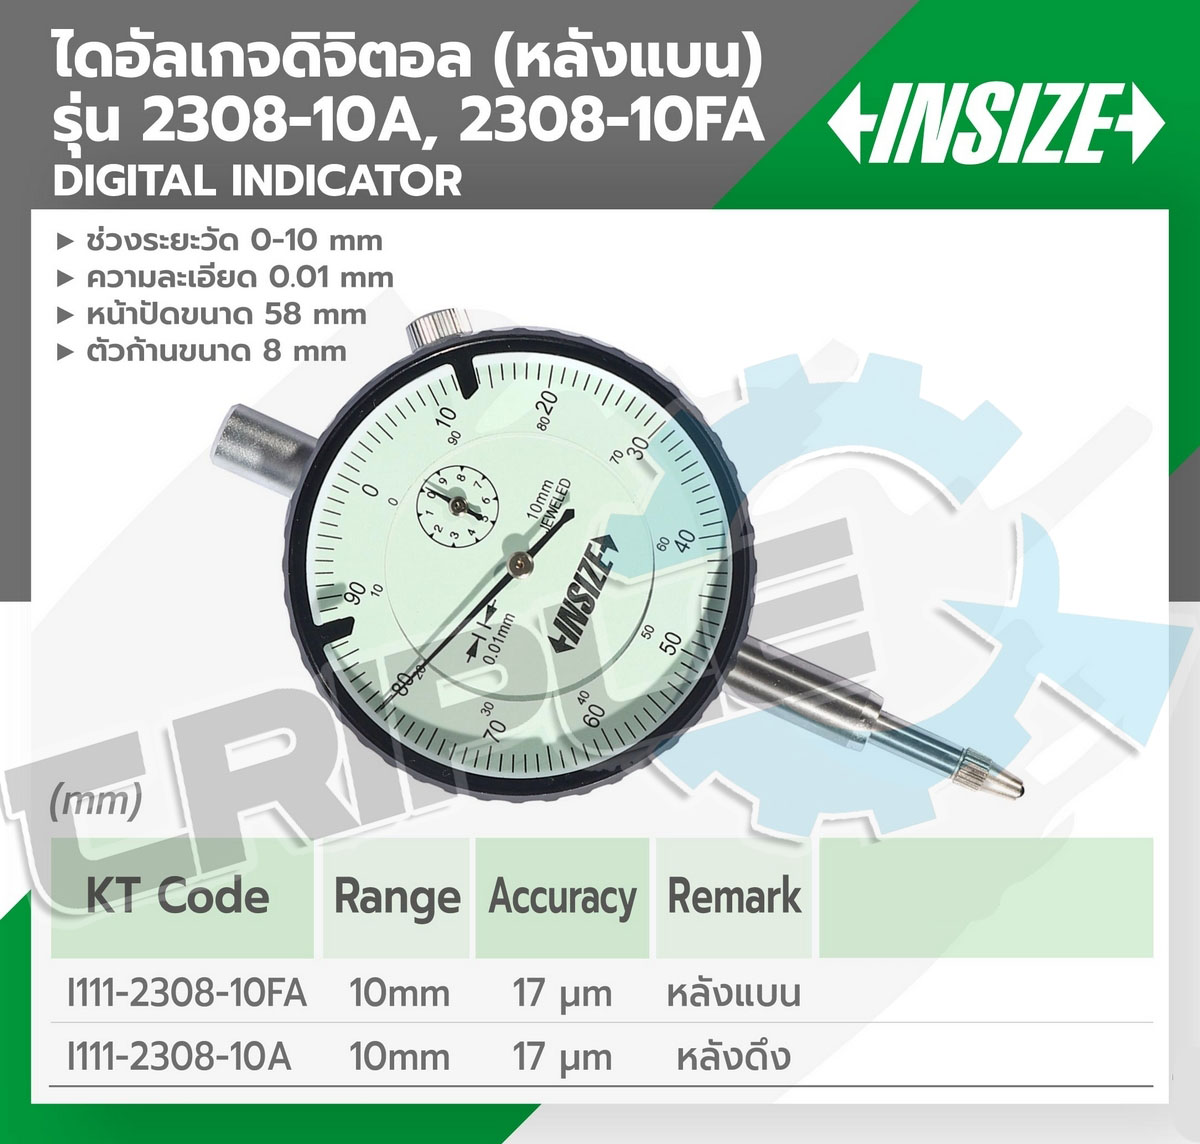 INSIZE - ไดอัลเกจดิจิตอล (หลังแบน) (Digital Indicator) รุ่น 2308-10FA ช่วงระยะวัด 0-10 มม. ความละเอียด 0.01 มม. หน้าปัดขนาด 58 มม. ตัวก้านขนาด 8 มม.